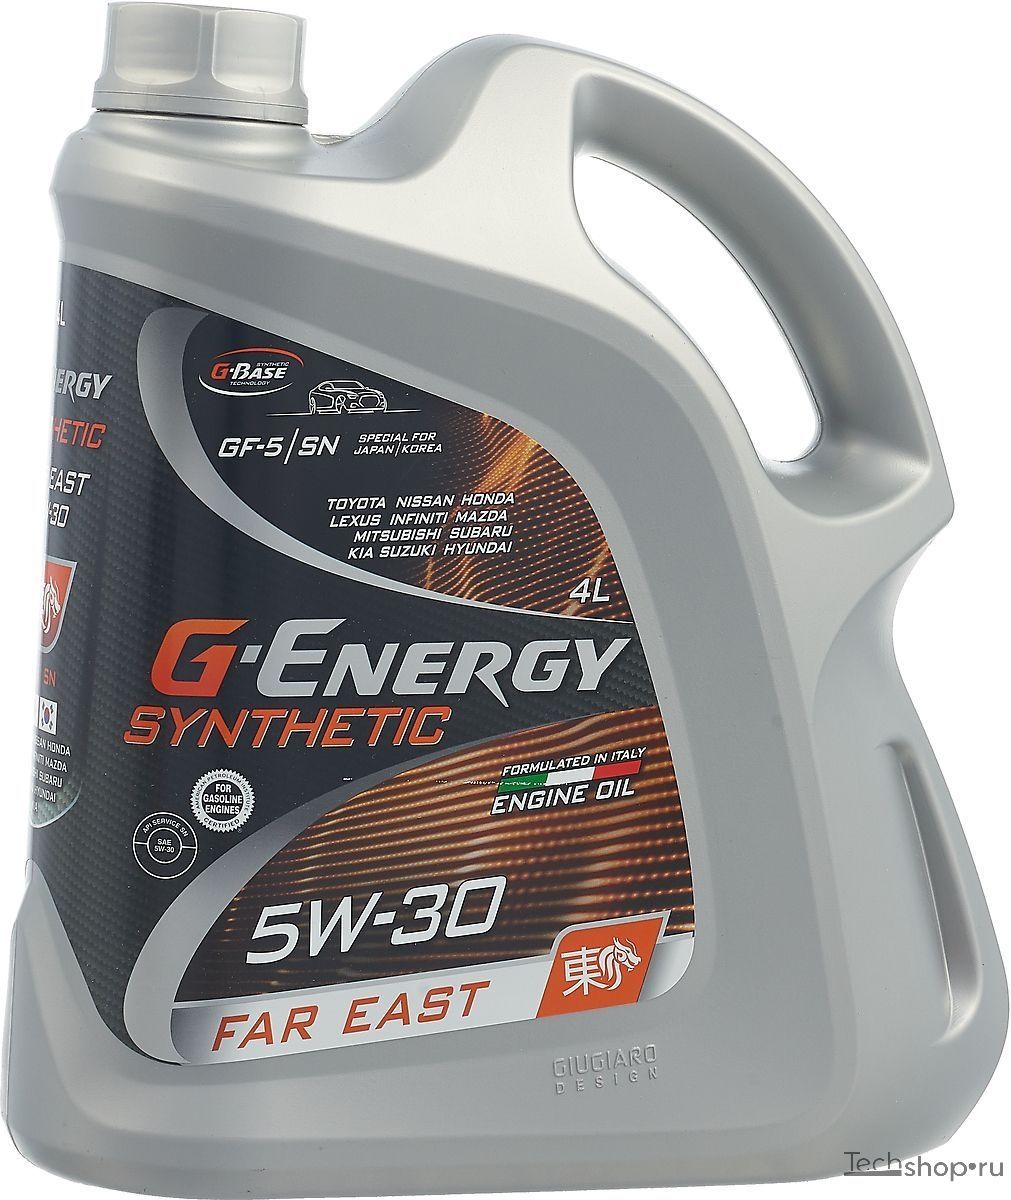 Масло G-Energy Synthetic Far East 5W-30, 4л